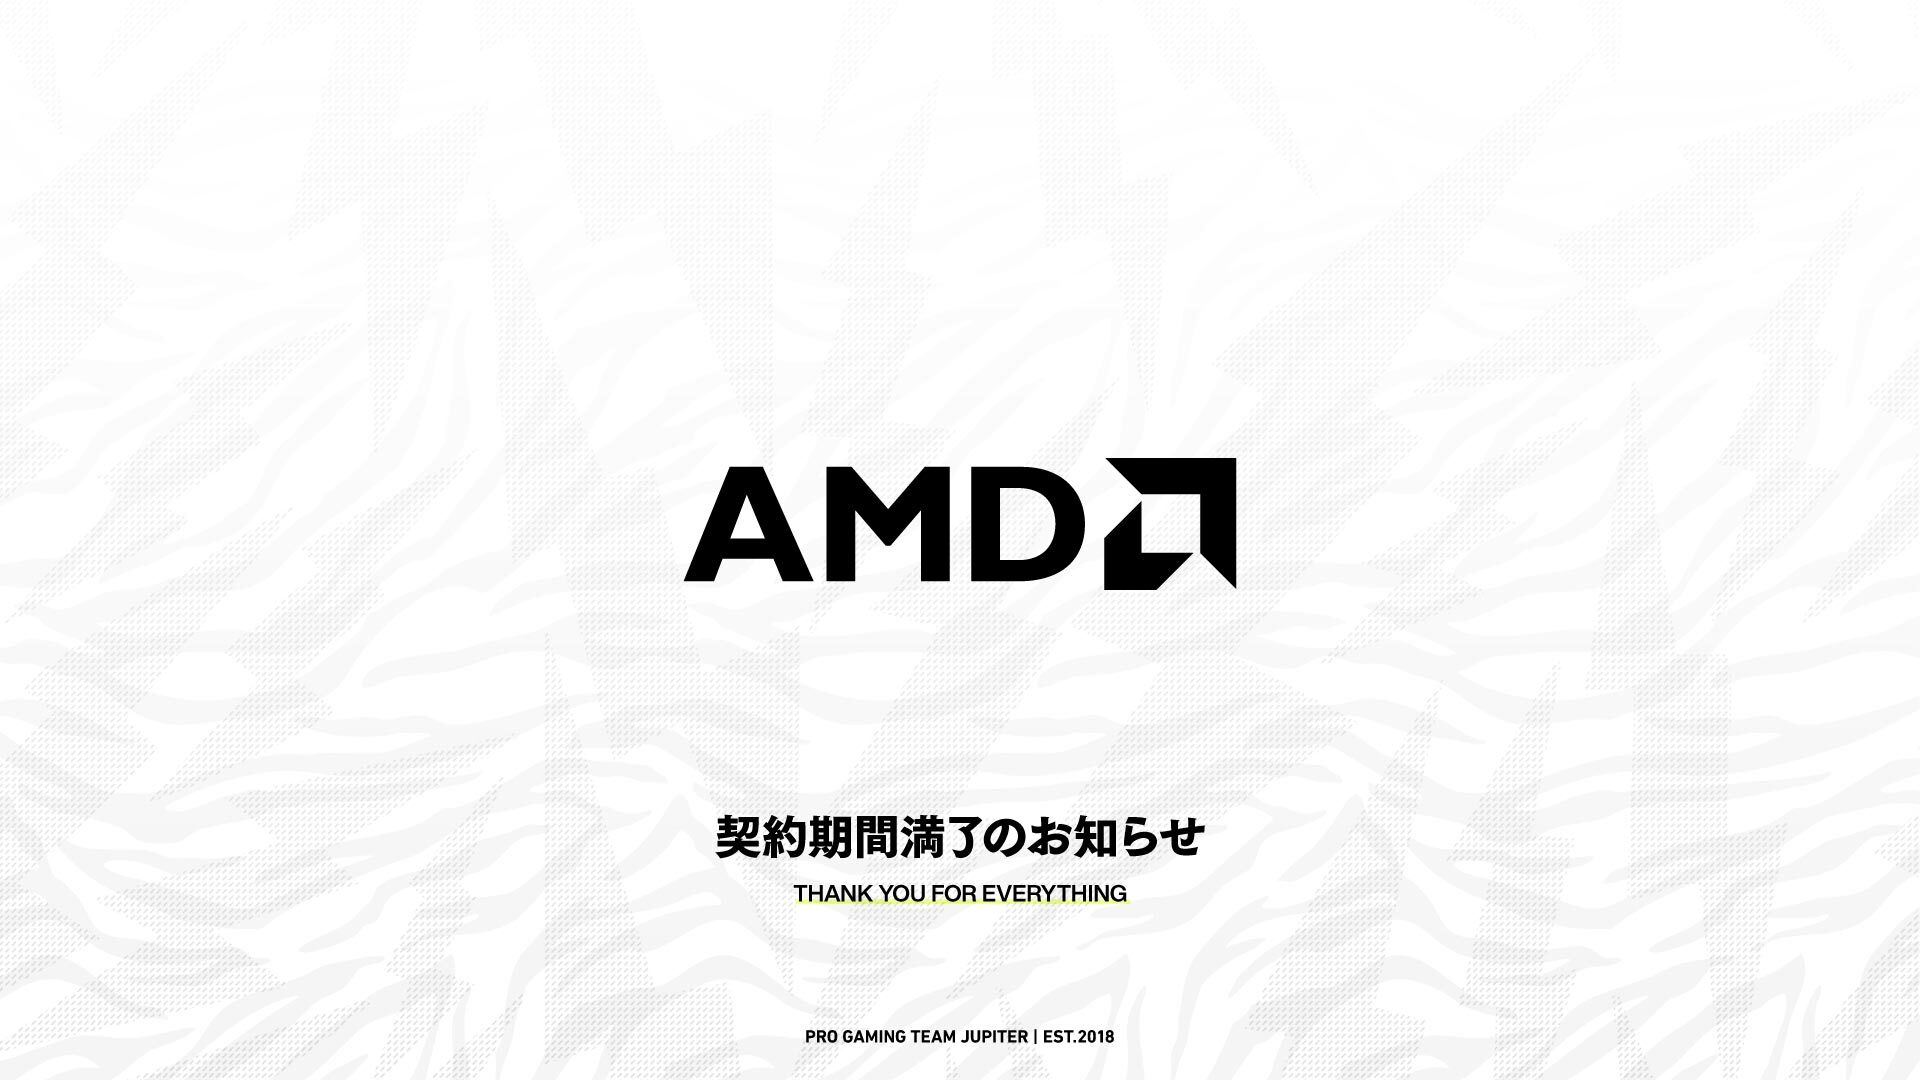 『AMD』とのスポンサー契約満了のお知らせ